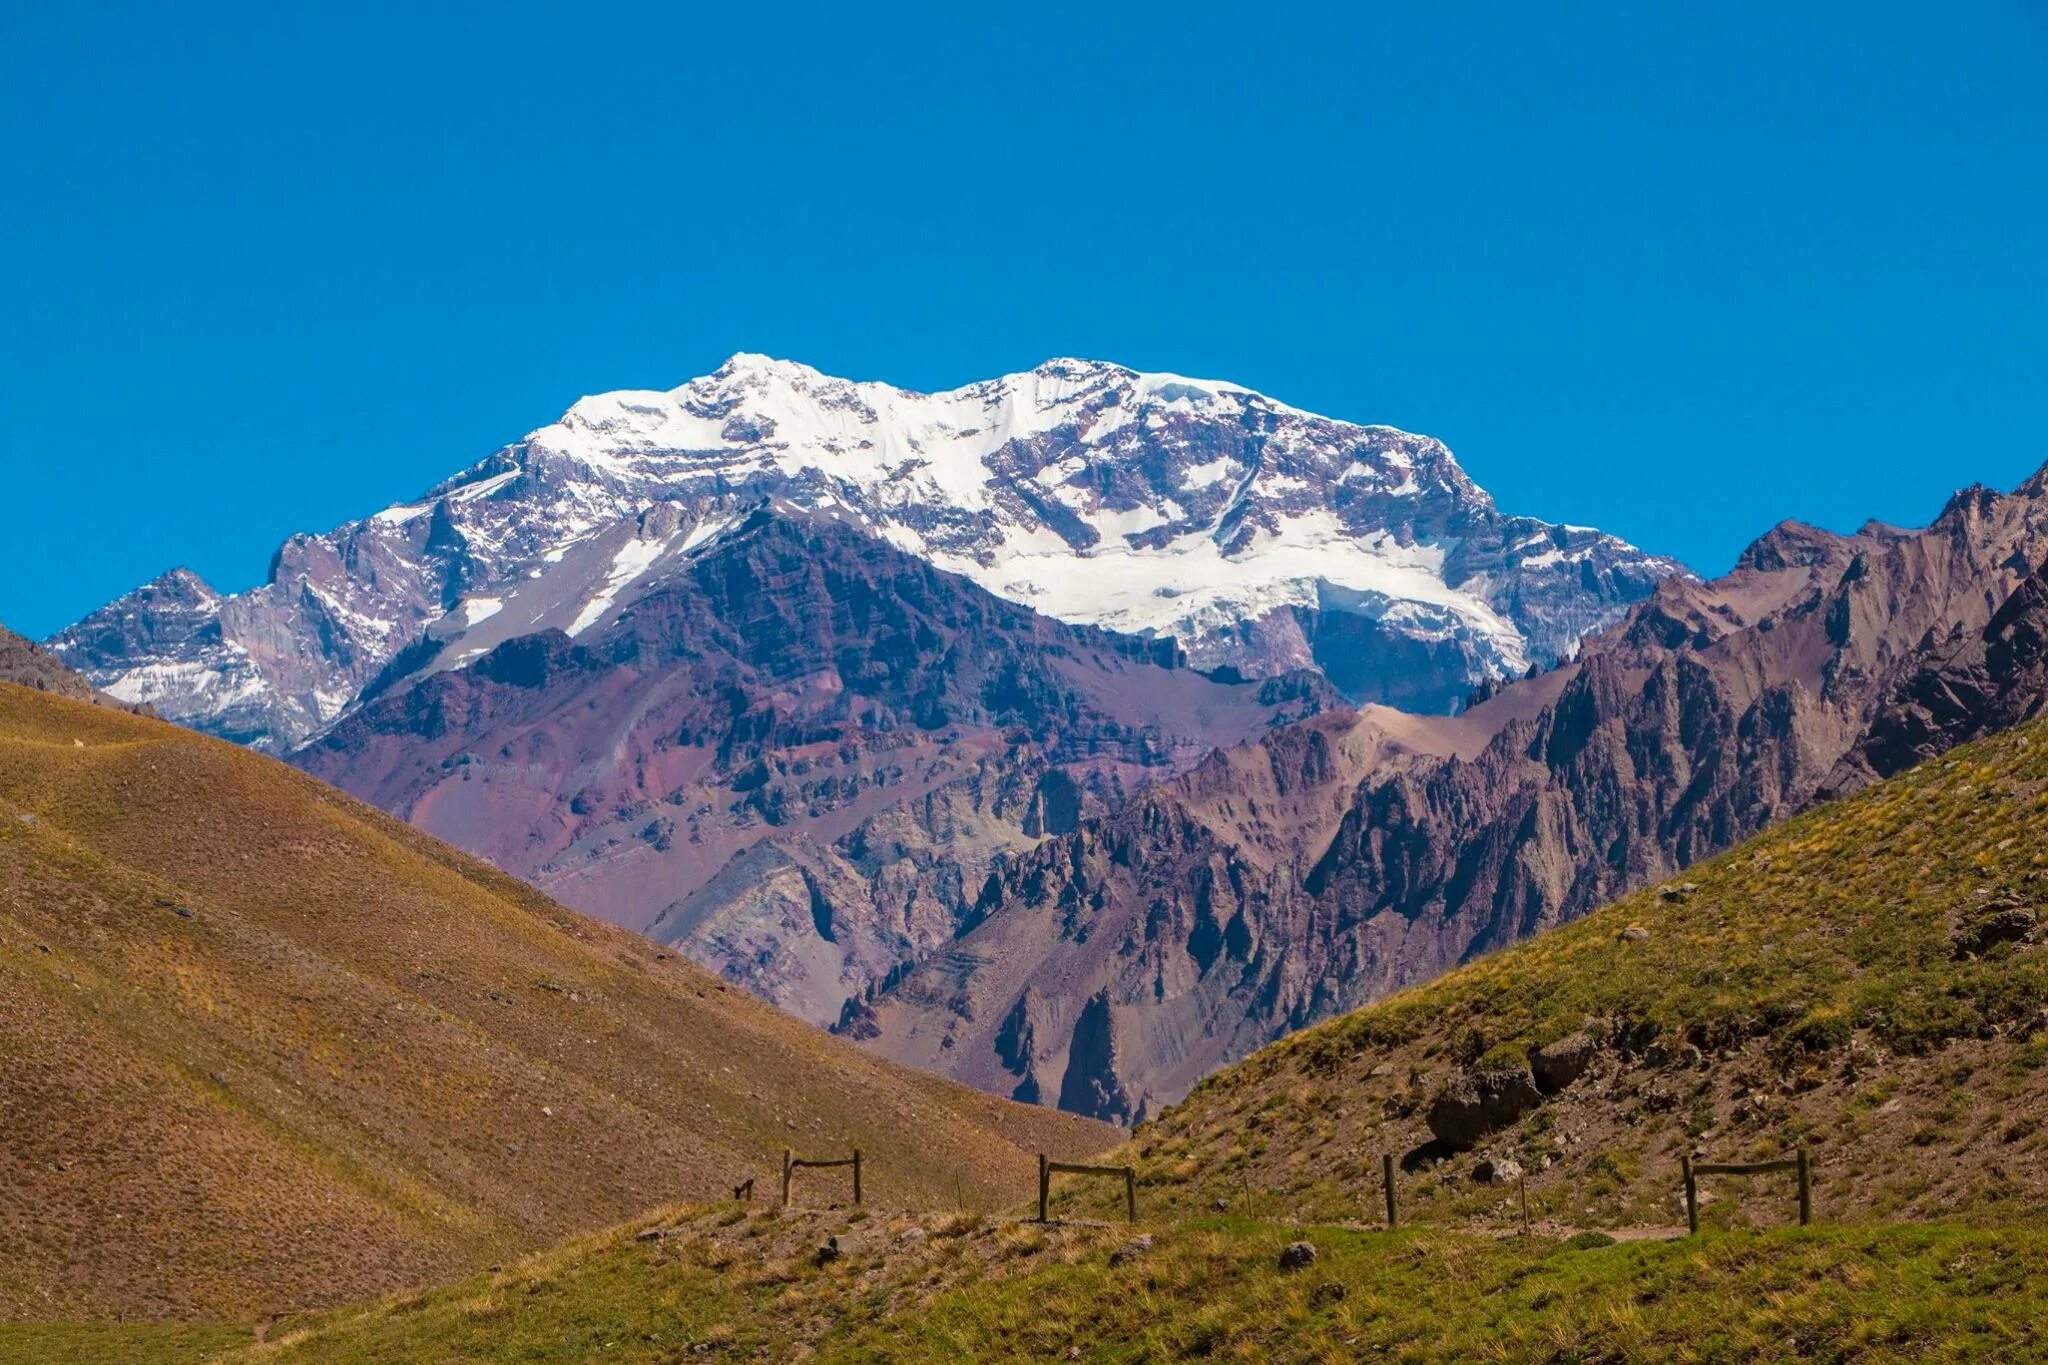 Гора Анды гора Аконкагуа. Южная Америка Аконкагуа Аргентина. Горы Южной Америки Анды и горы Аконкагуа. Самая высокая вершина - гора Аконкагуа, 6960 м.